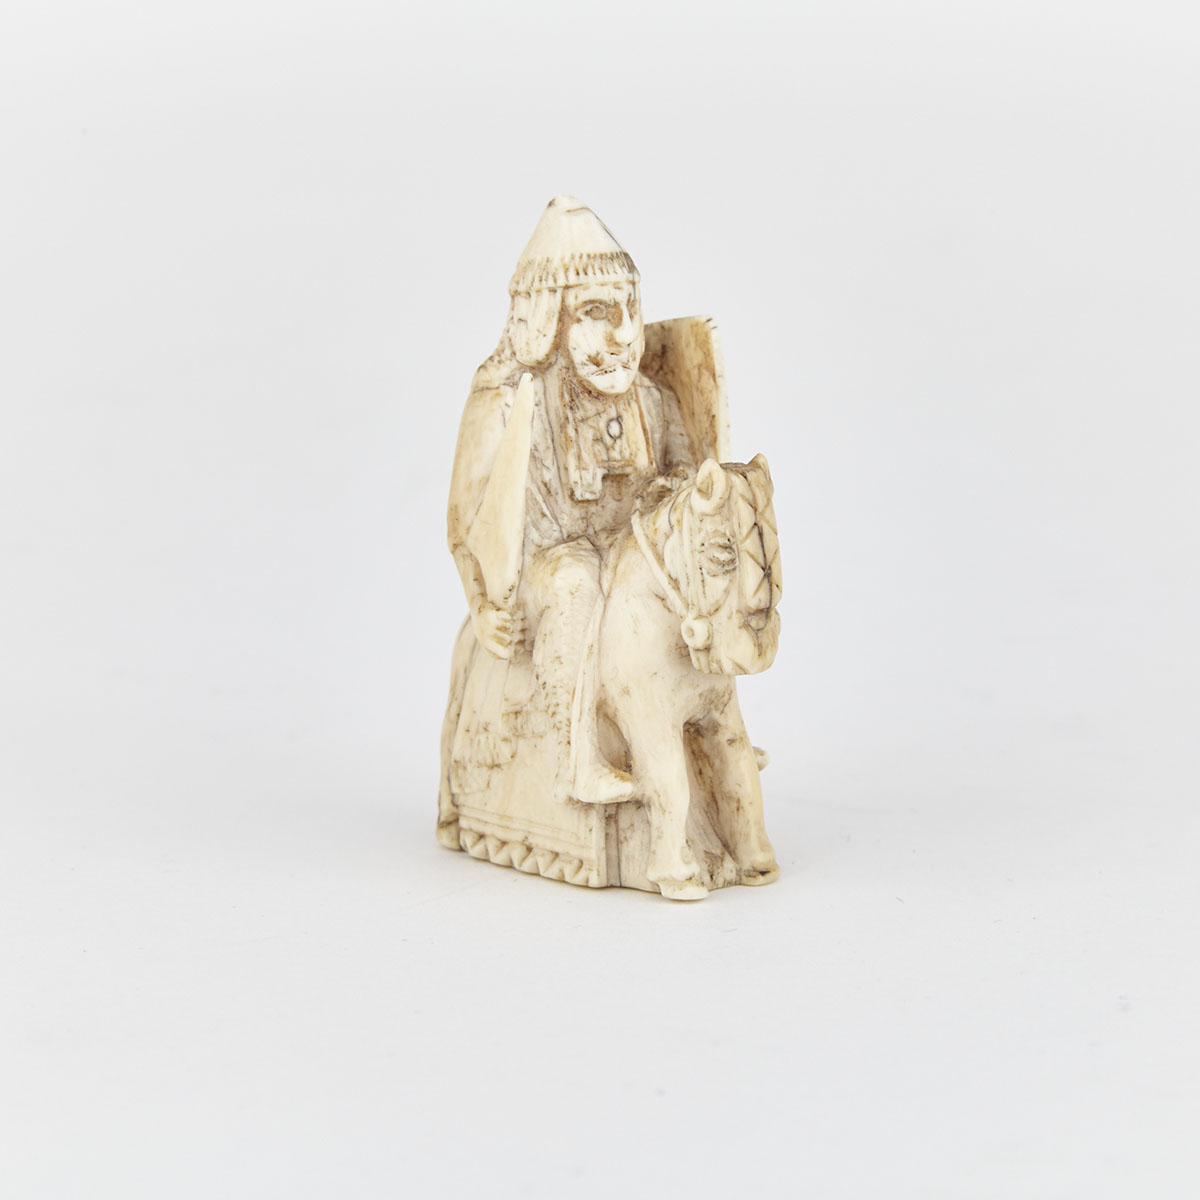 Scandinavian Carved Walrus Ivory Chess Piece, 17th century